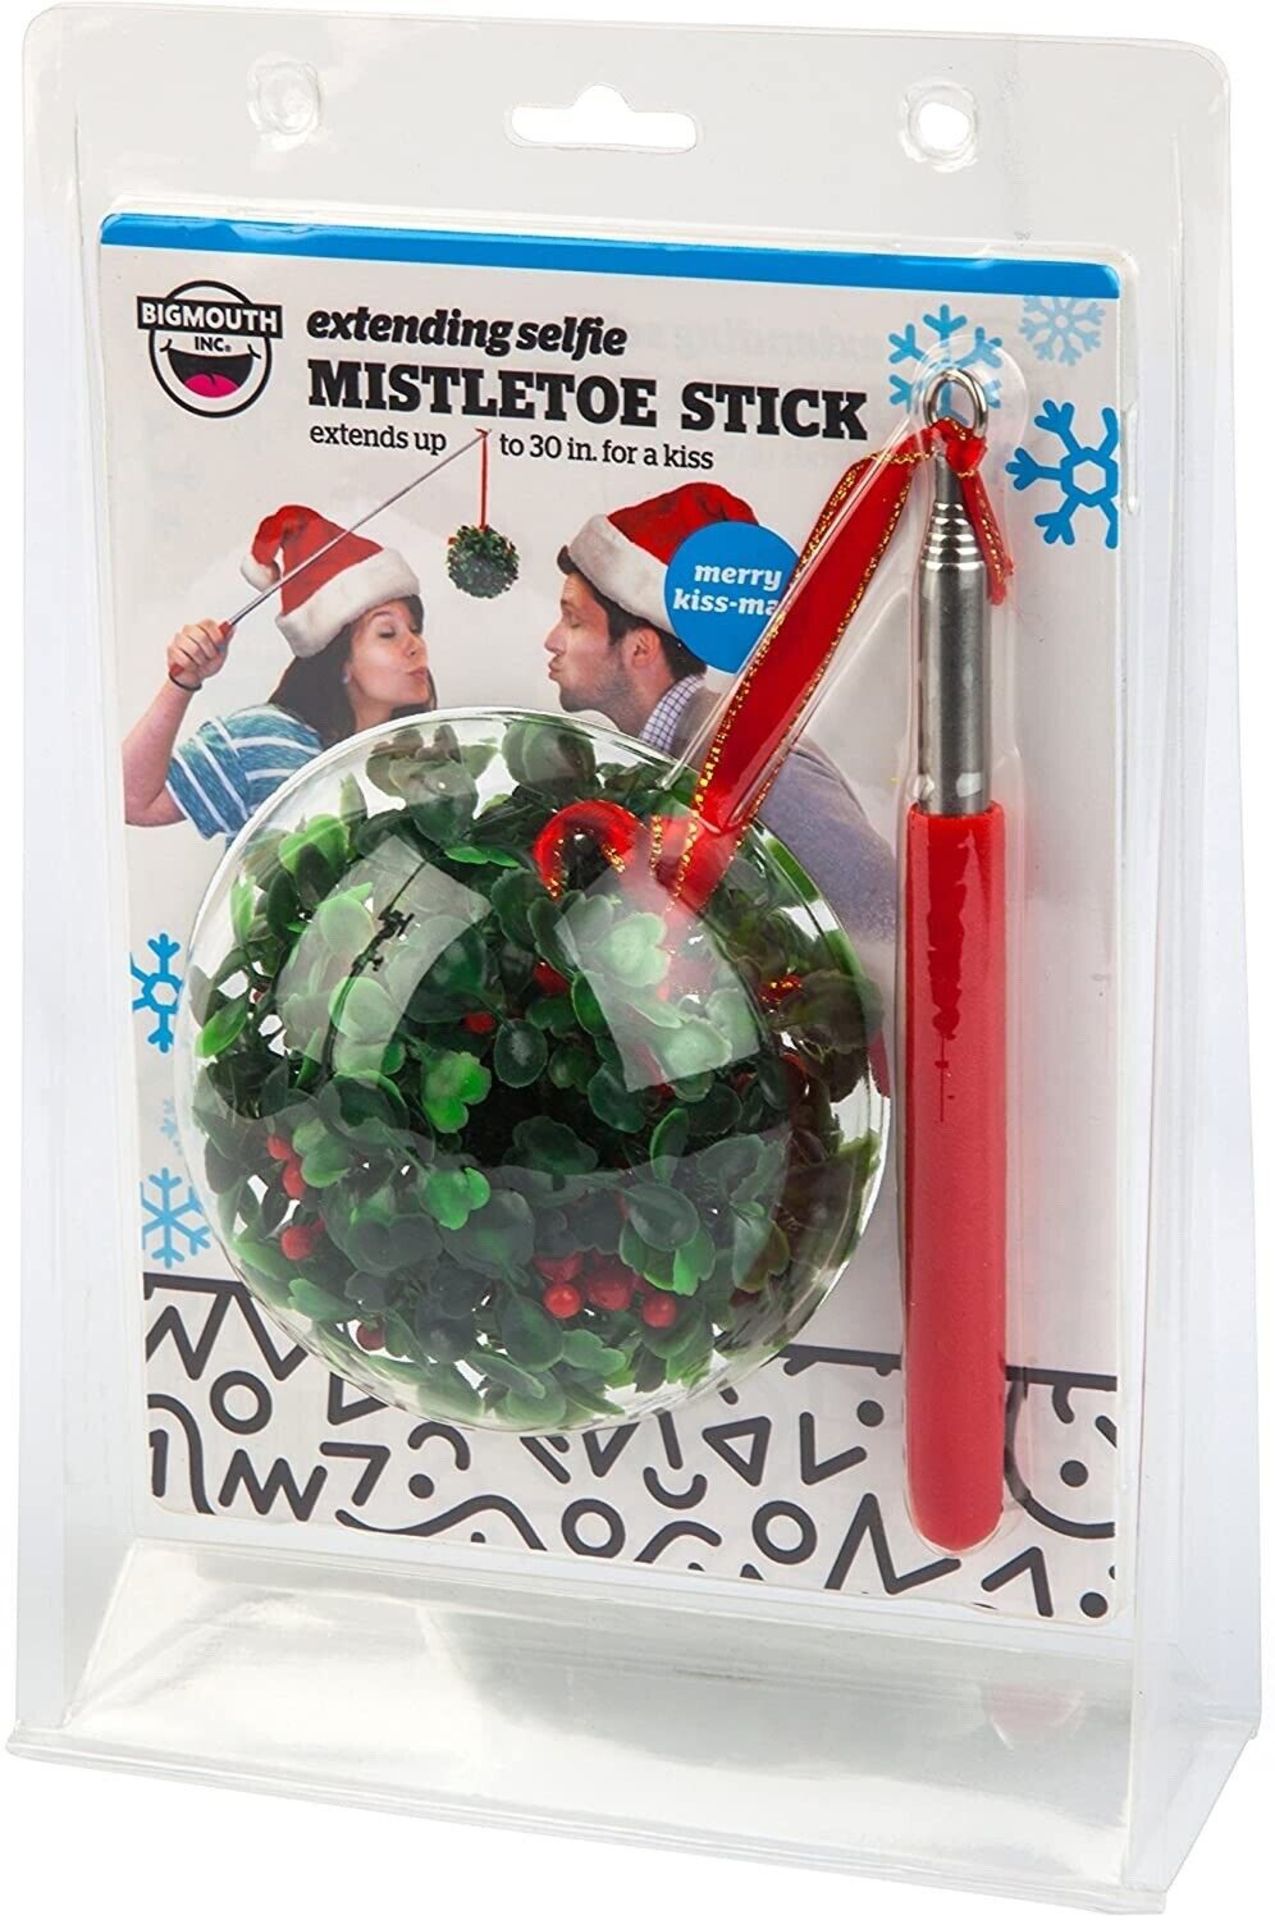 RRP £8.99 each - 24 x Big Mouth Inc The Mistletoe Extending Selfie Stick